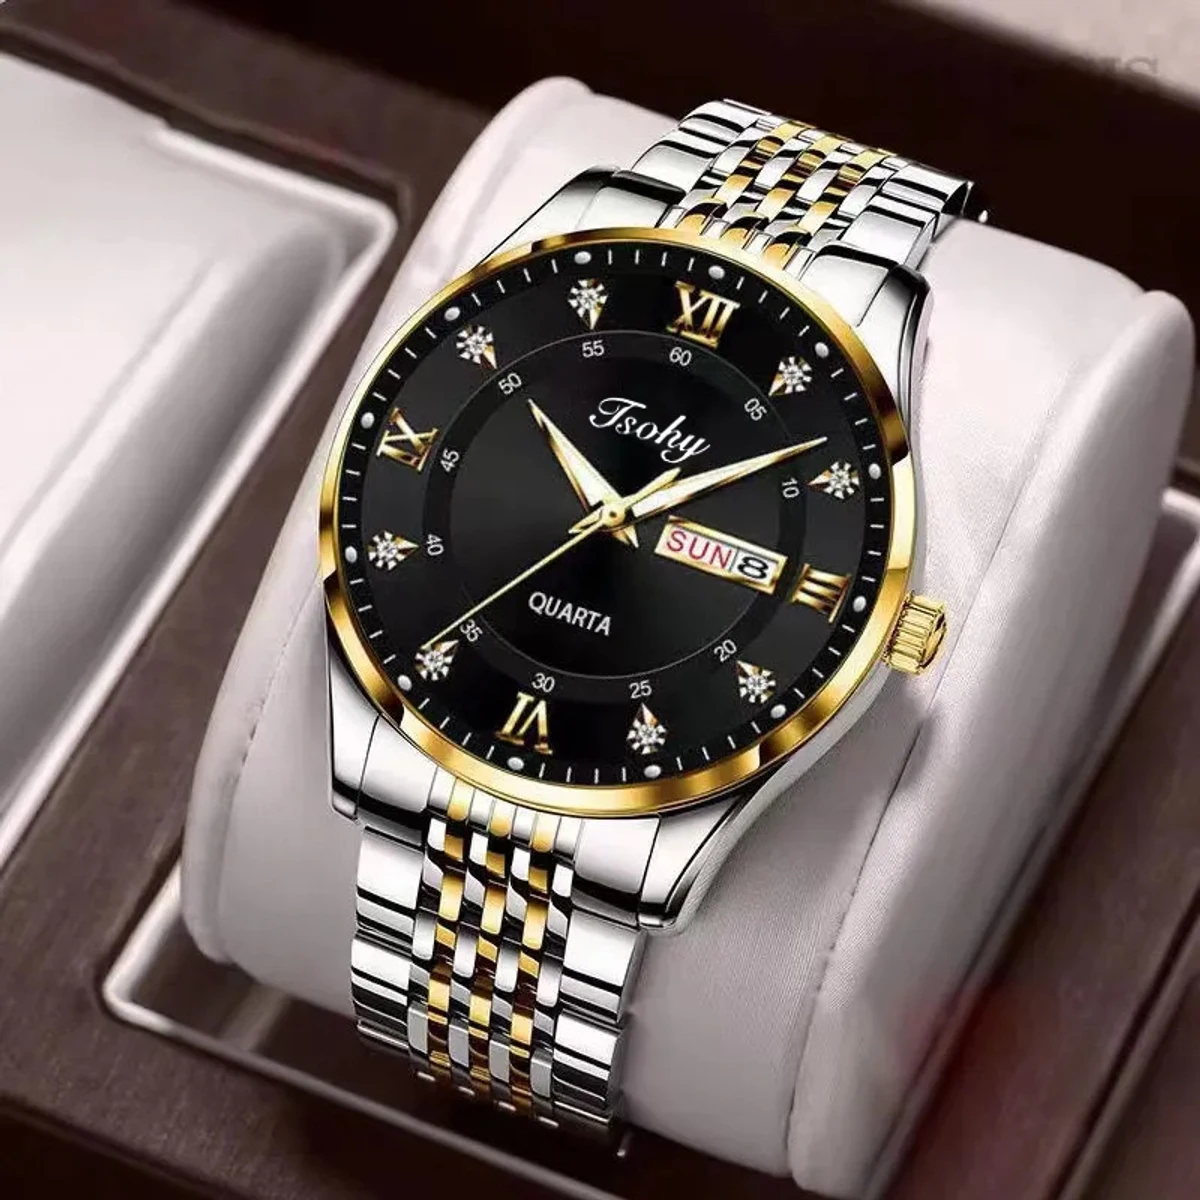 Luxury ISOHY authentic men's watch waterproof night light dual calendar watch men's quartz watch ceiling glass- Golden & Black